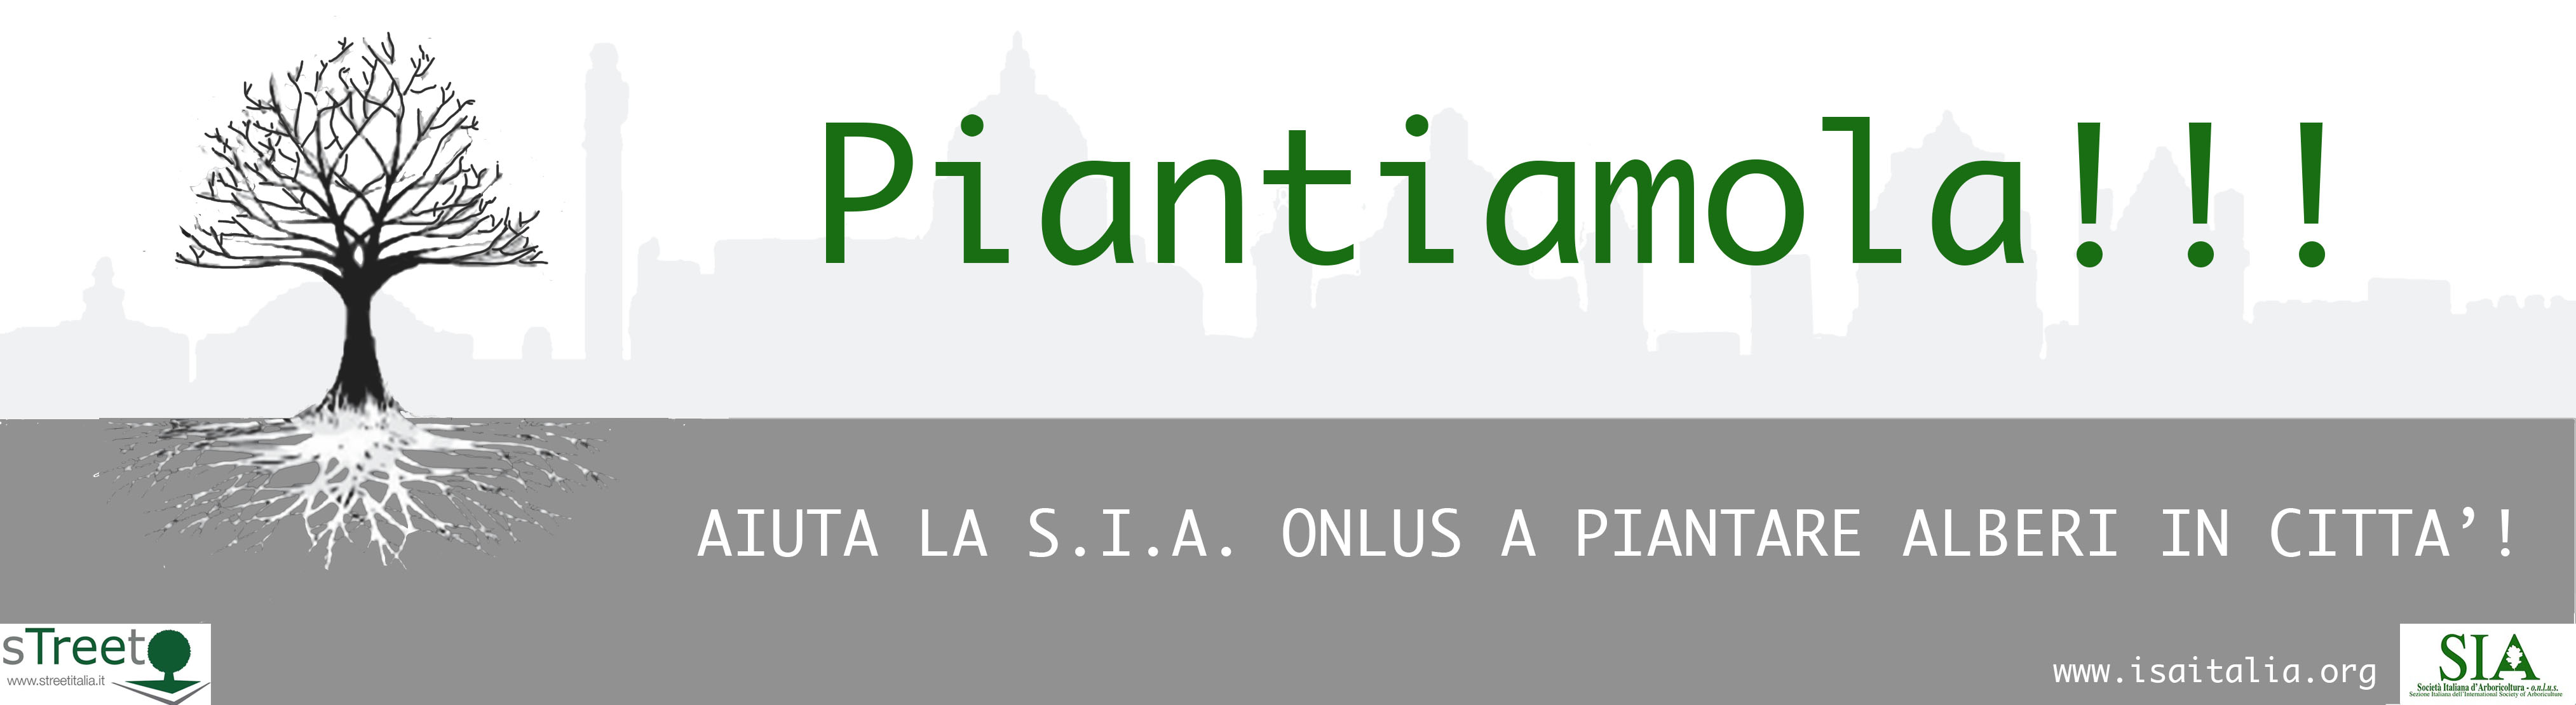 PIANTIAMOLA logo